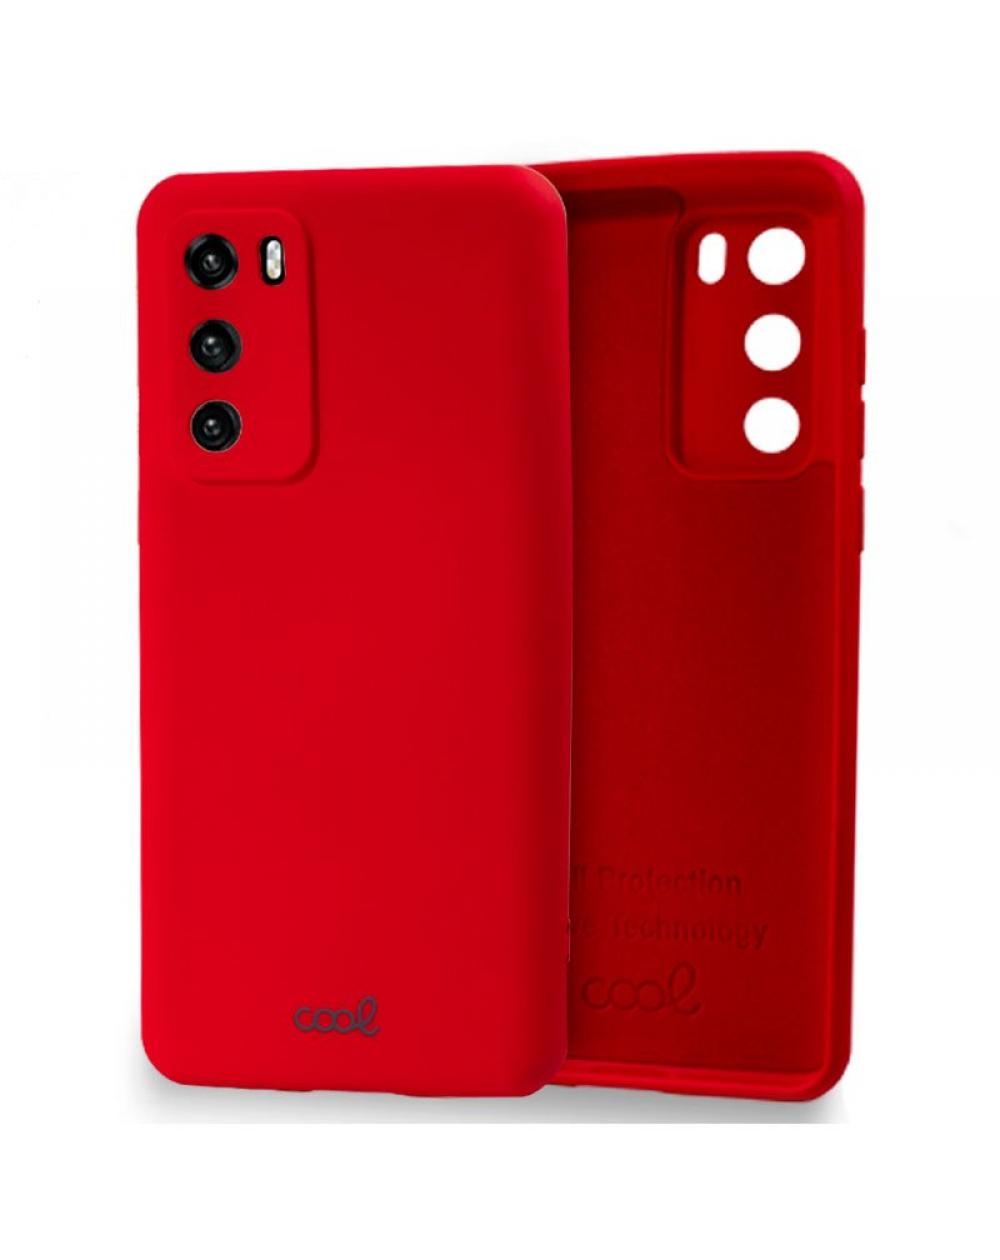 Carcasa COOL para Huawei P40 Cover Rojo - Imagen 1